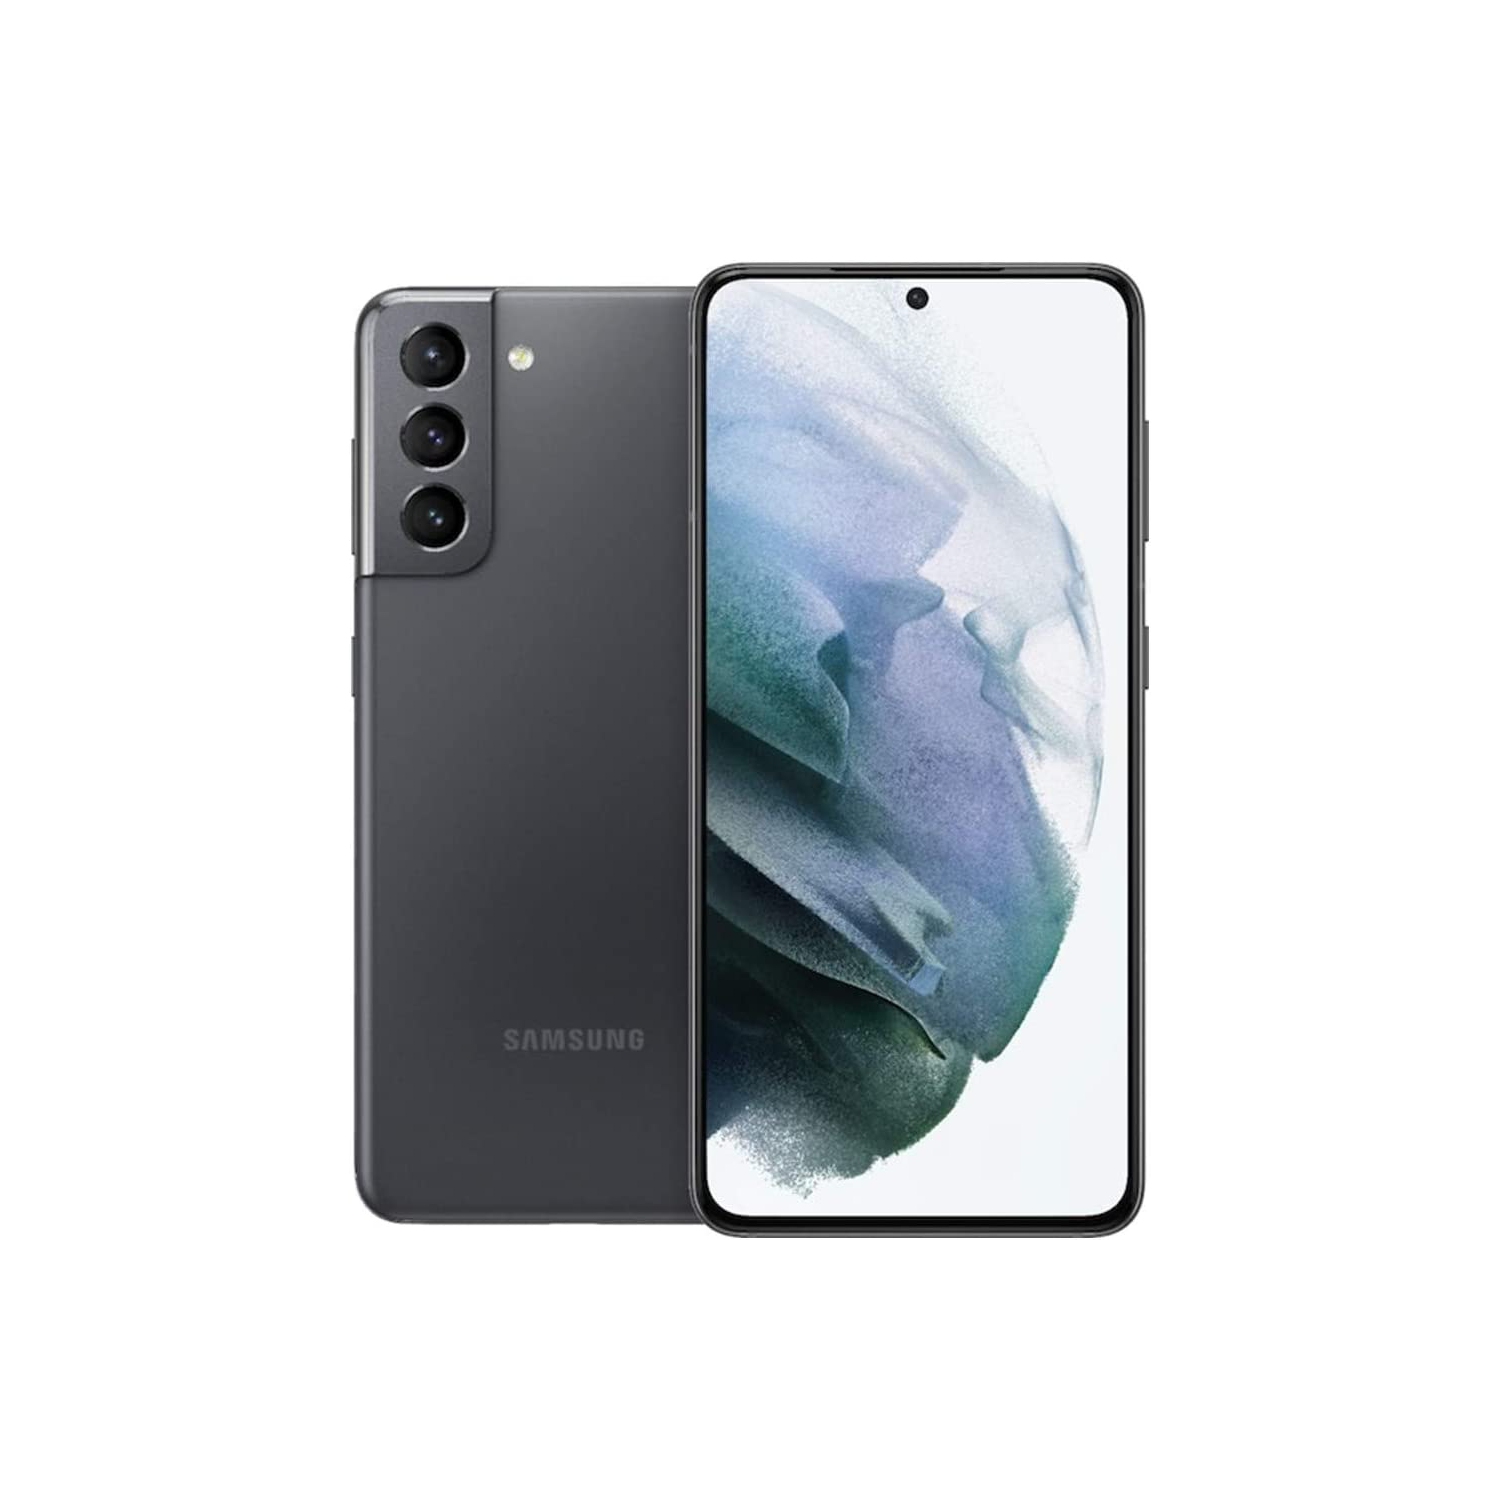 Samsung Galaxy S21 5G - 128GB - Phantom Black - Unlocked - Open Box